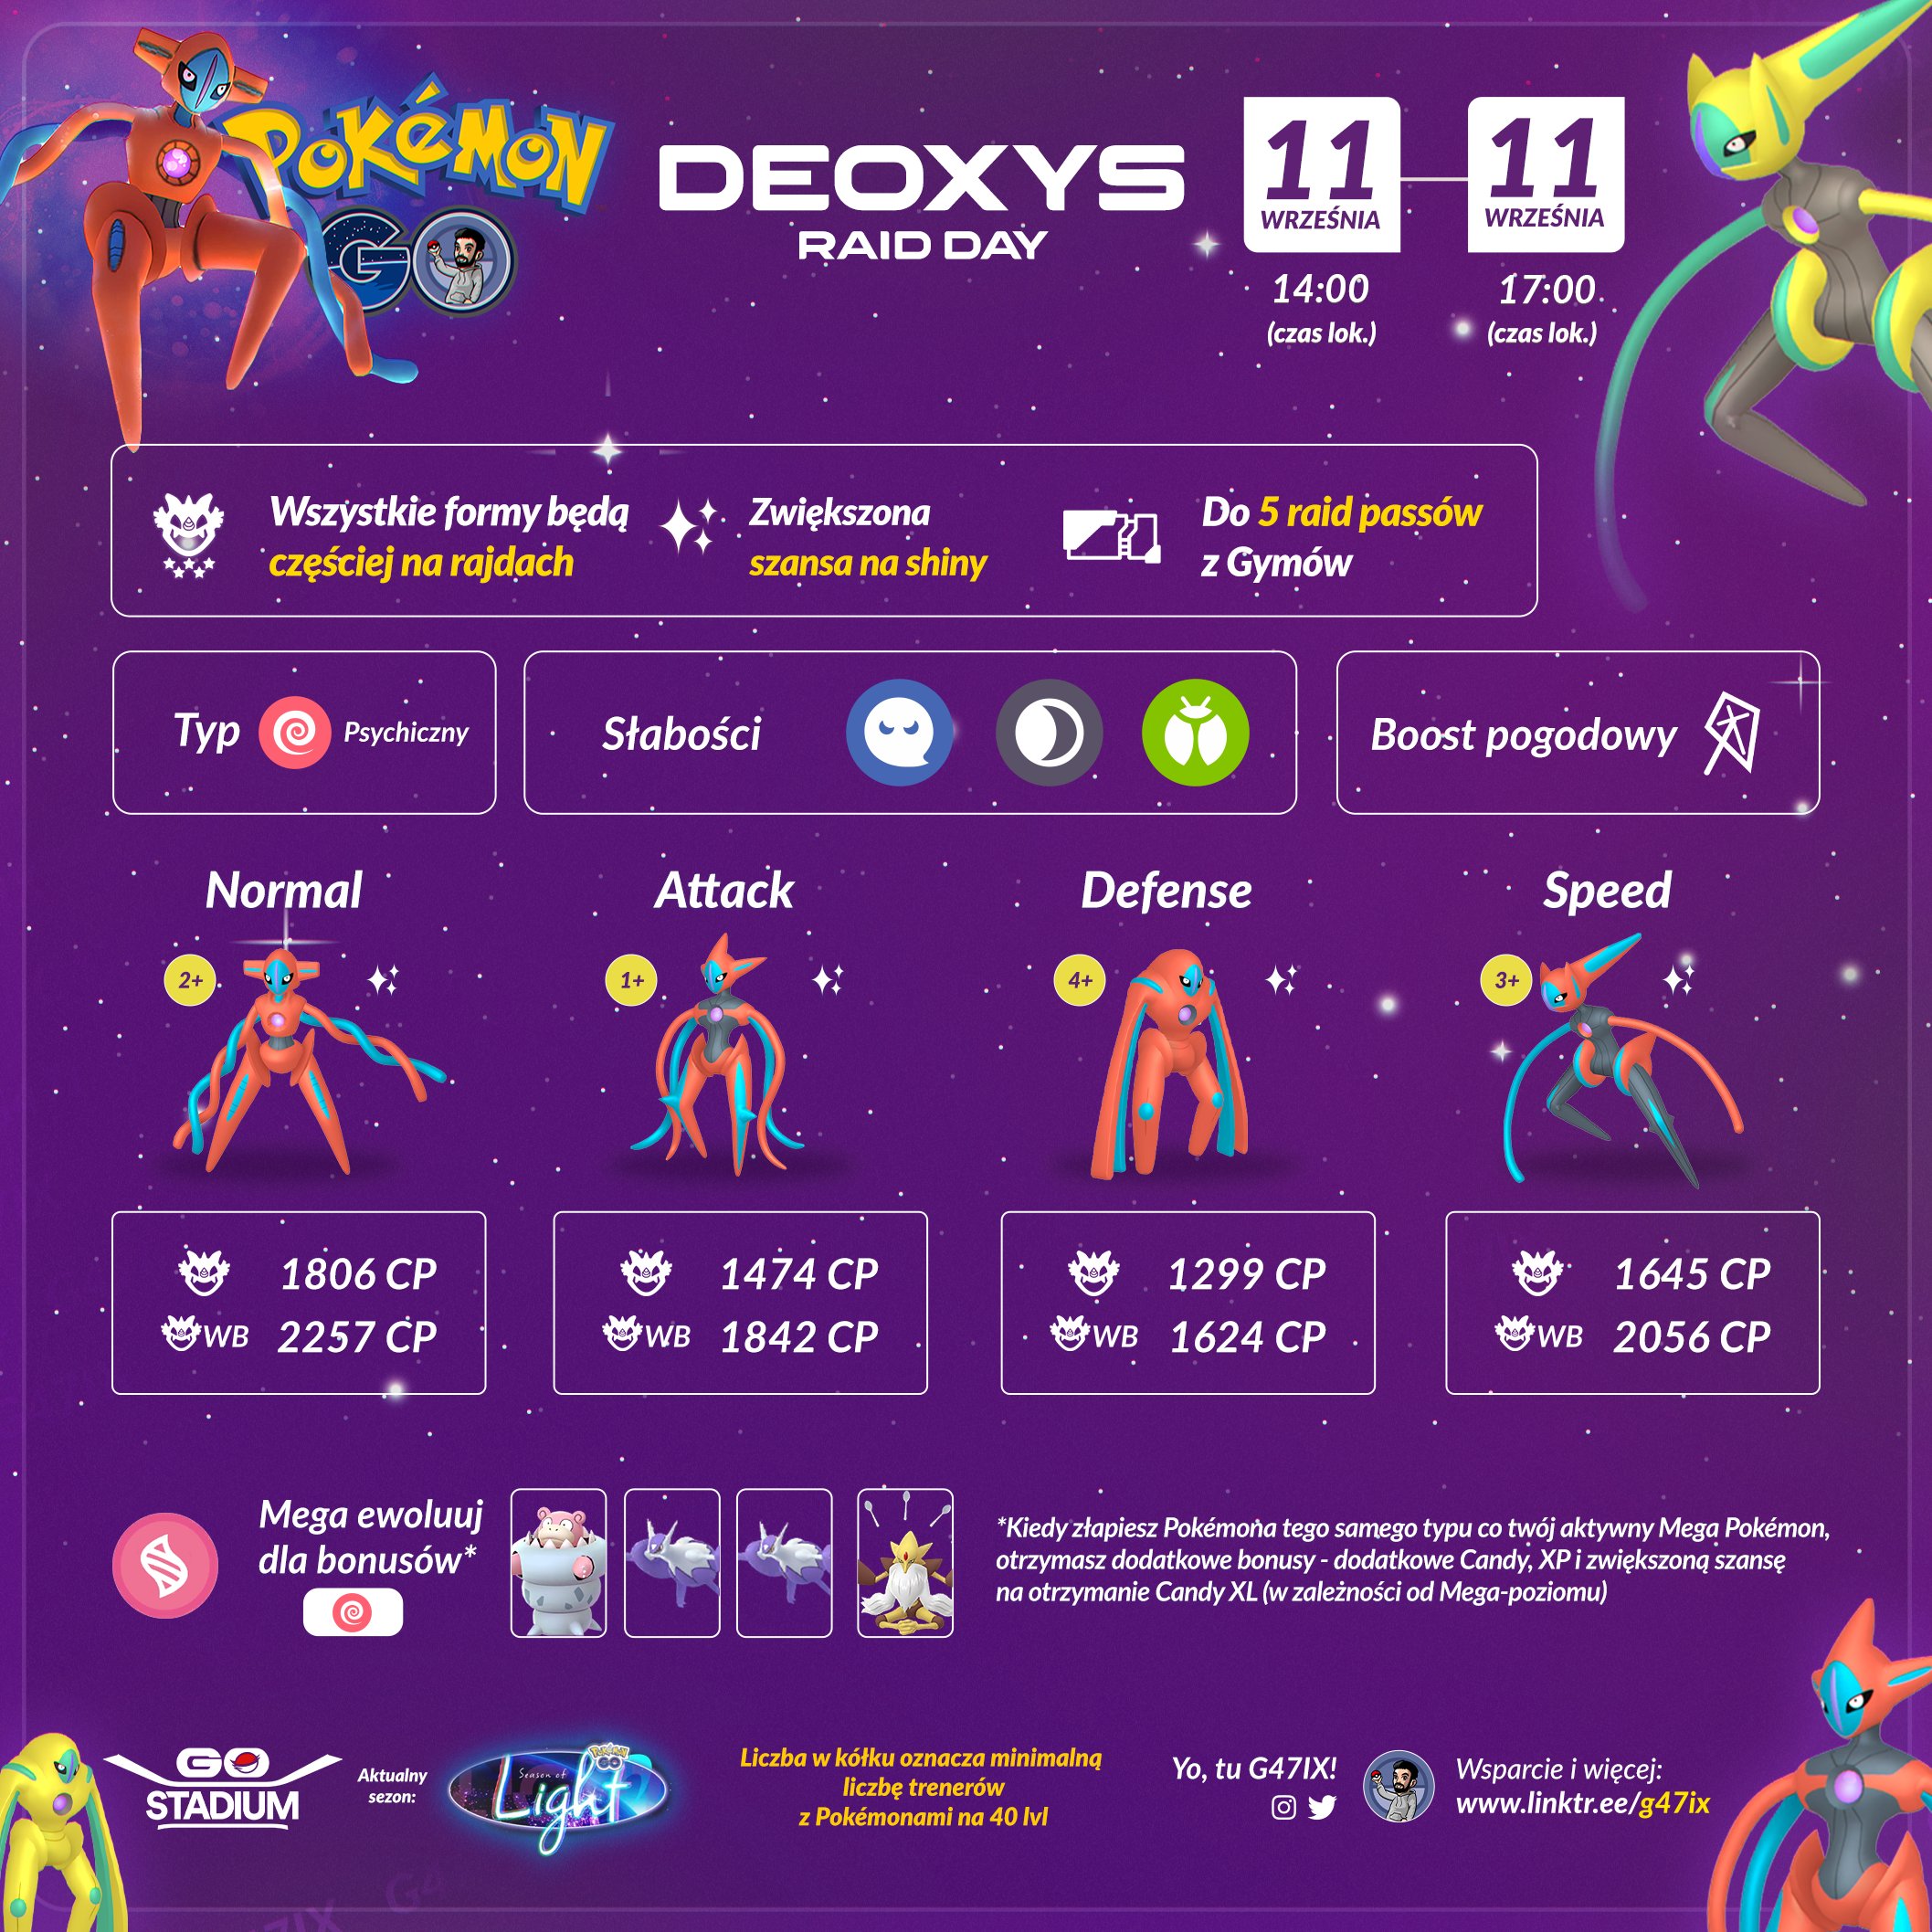 Deoxys - Pokemon Go